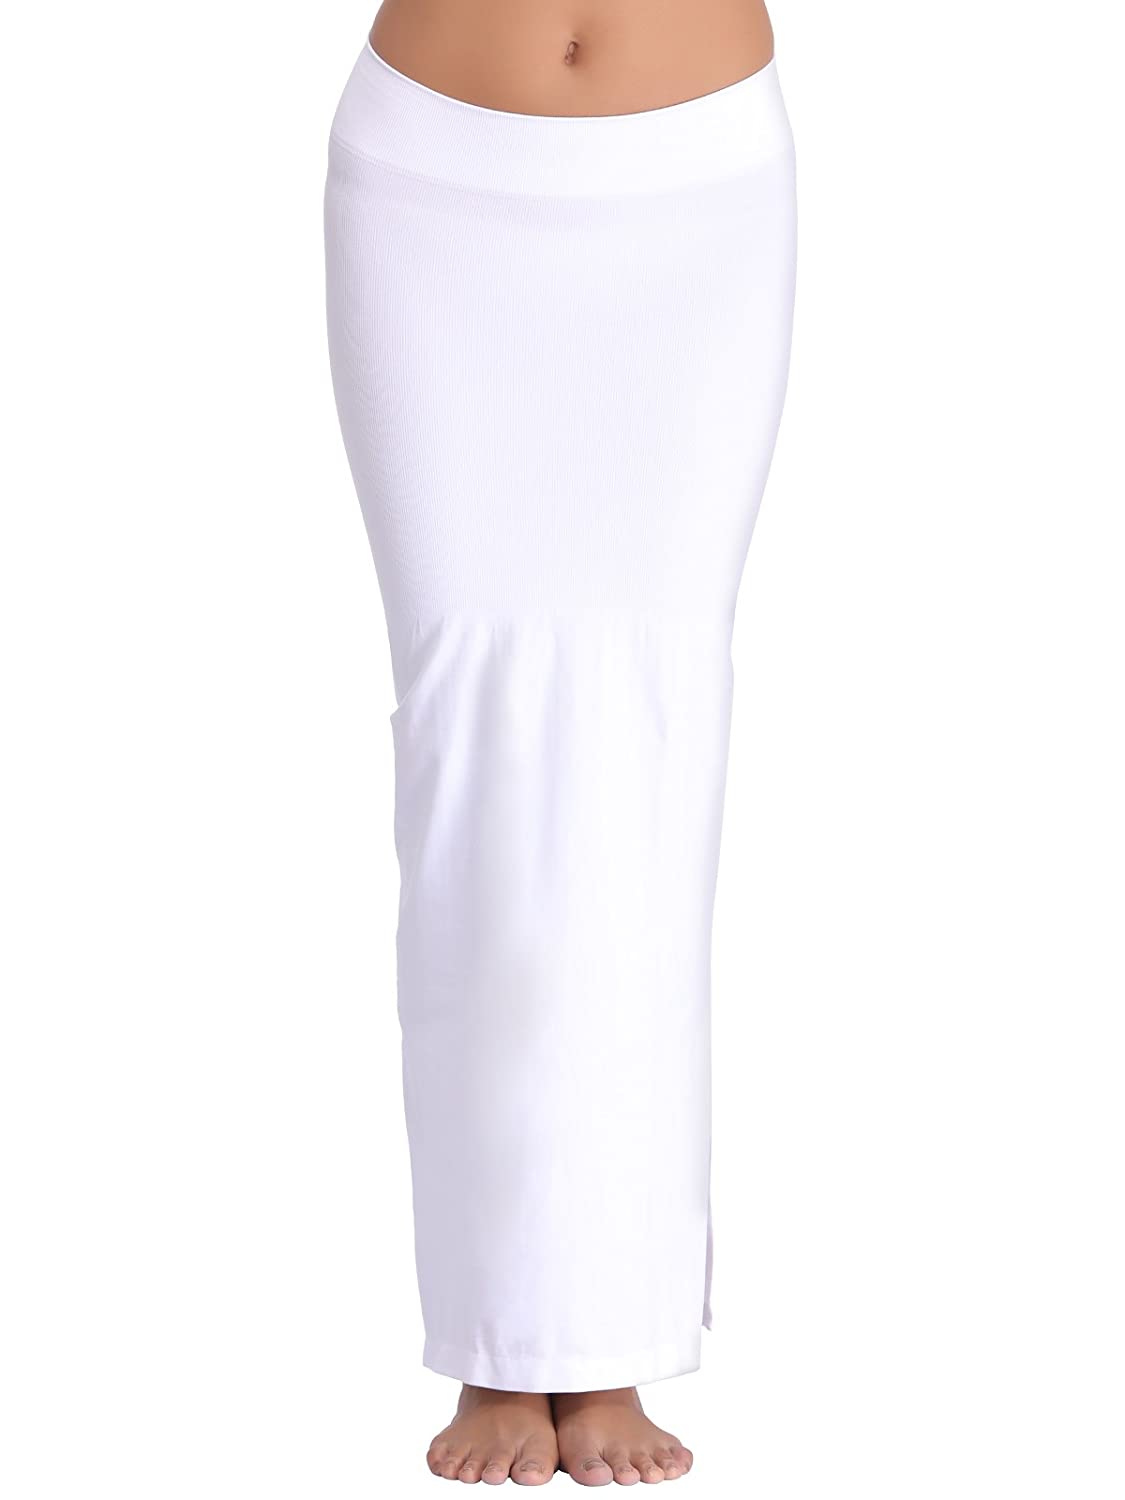 Clovia Women's Saree Shapewear White Color Petticoat